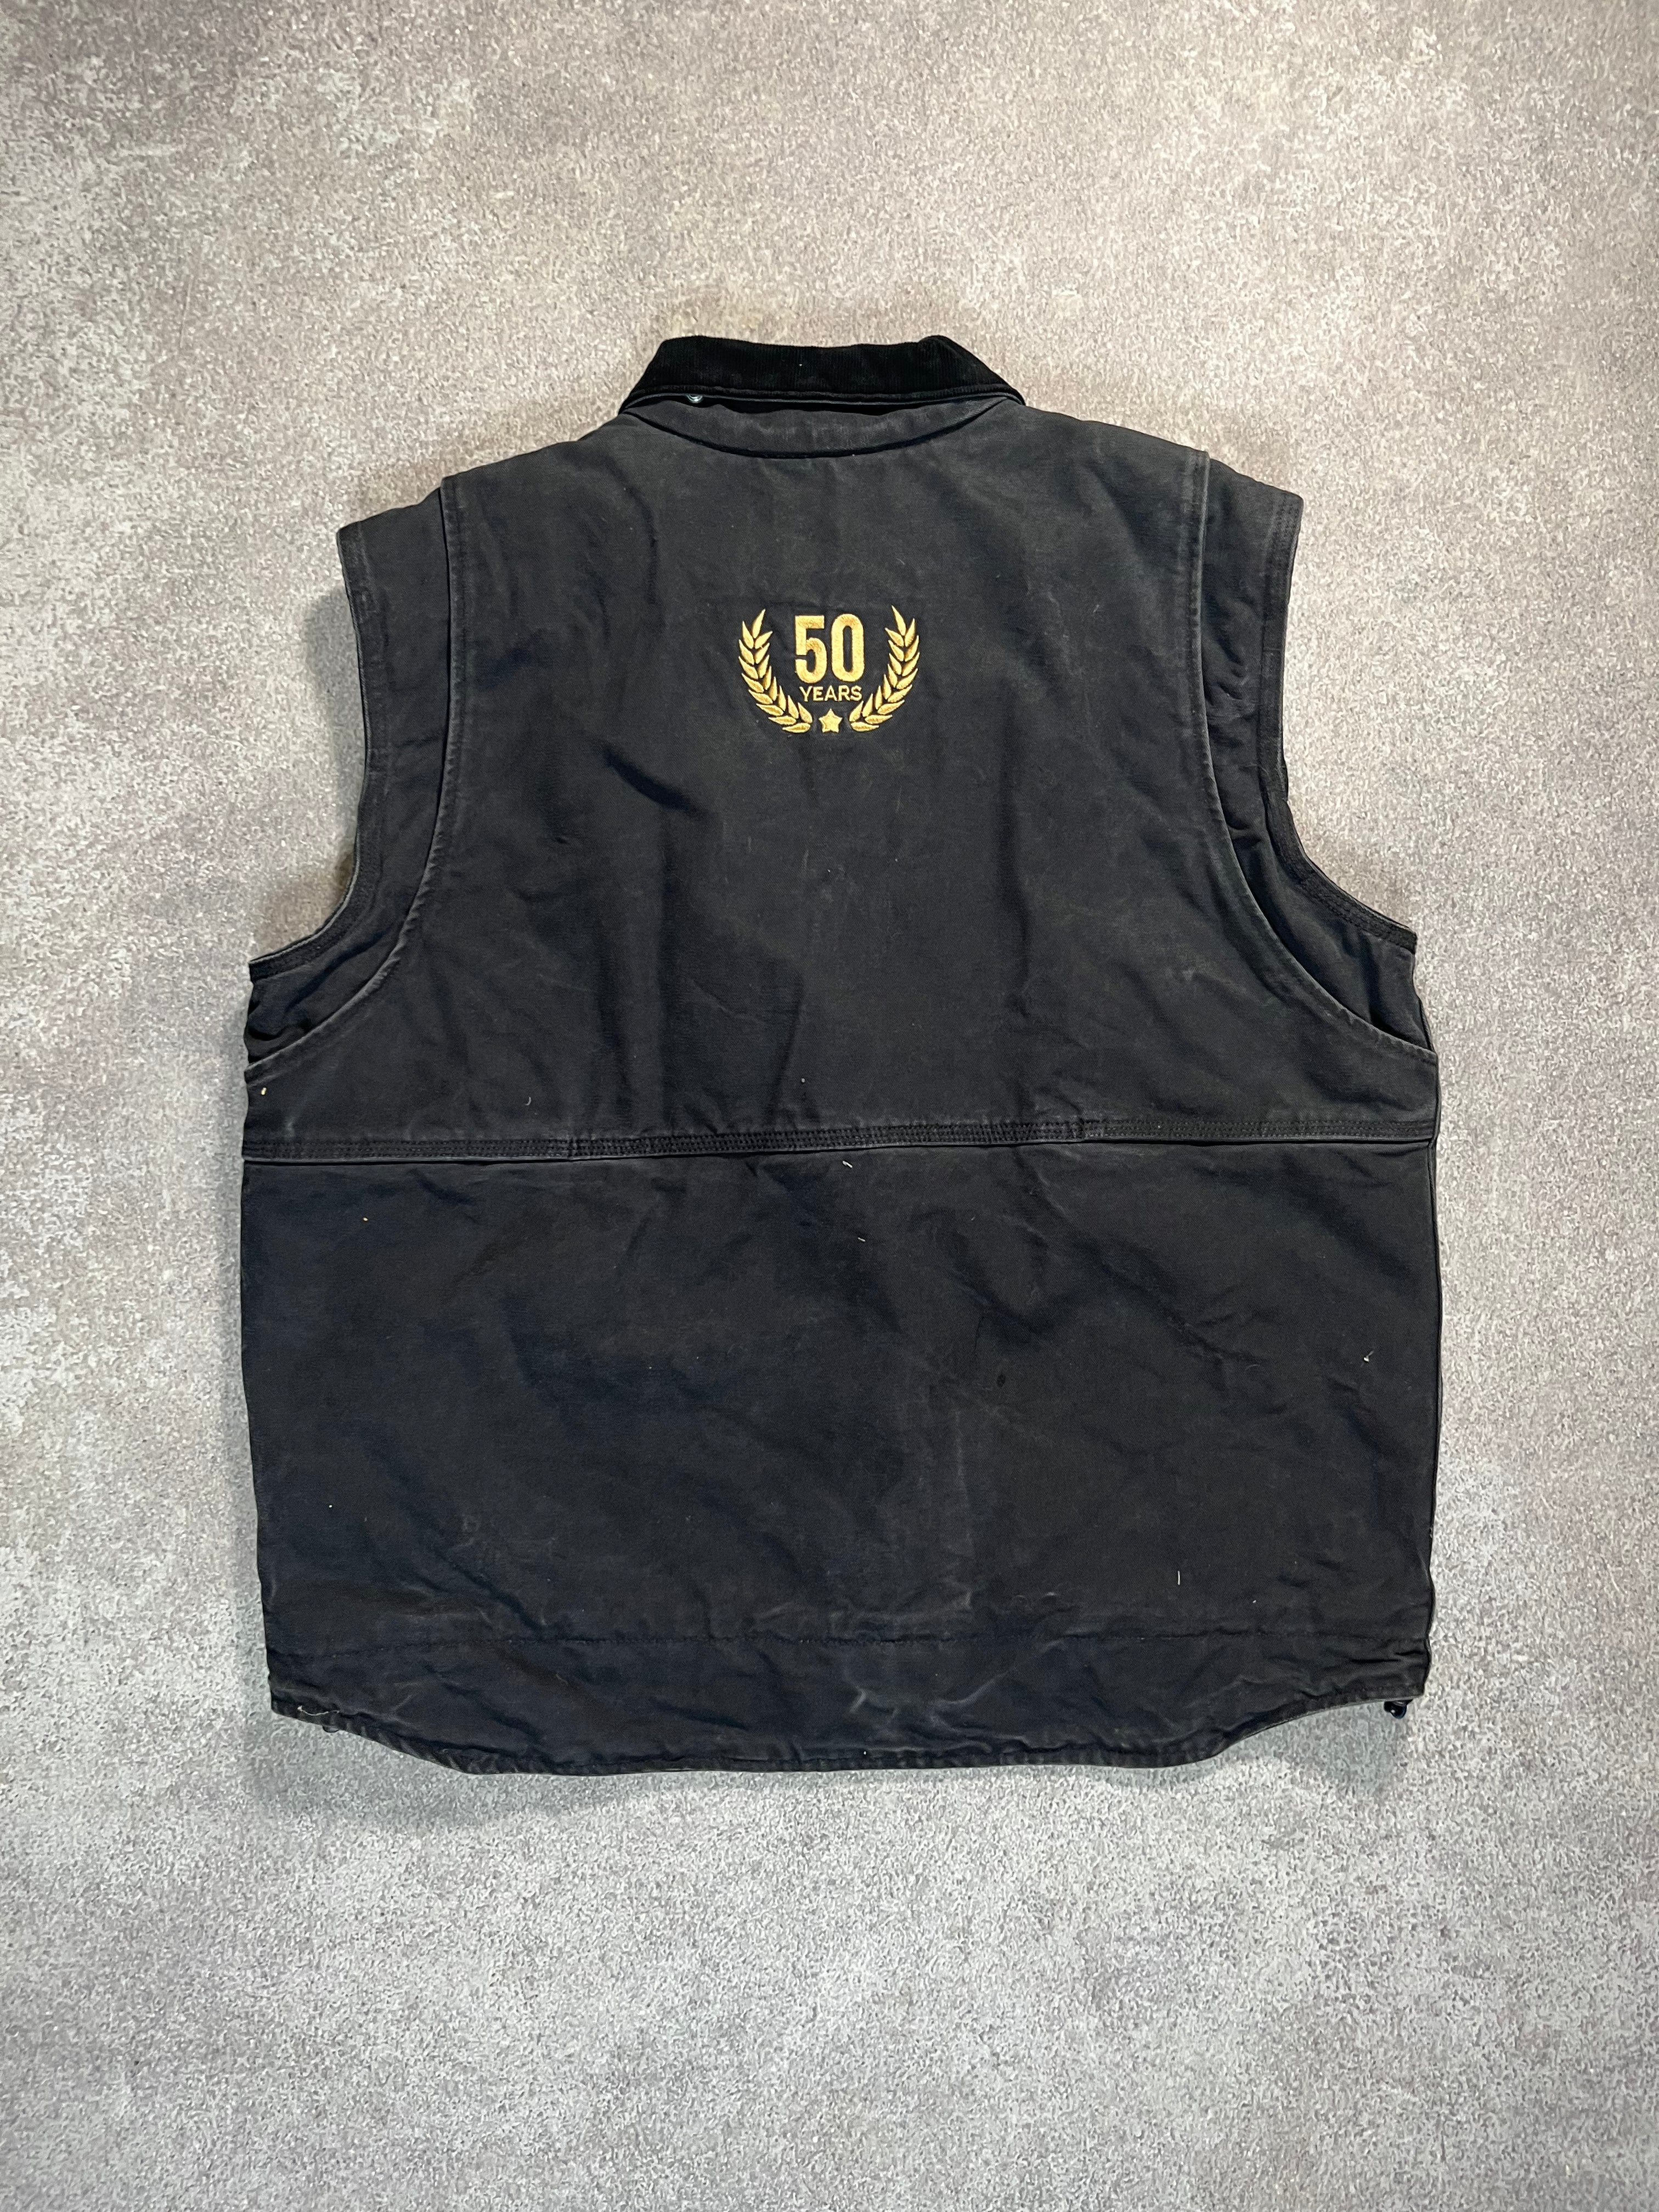 Carhartt Canvas Vest Black // Large - RHAGHOUSE VINTAGE